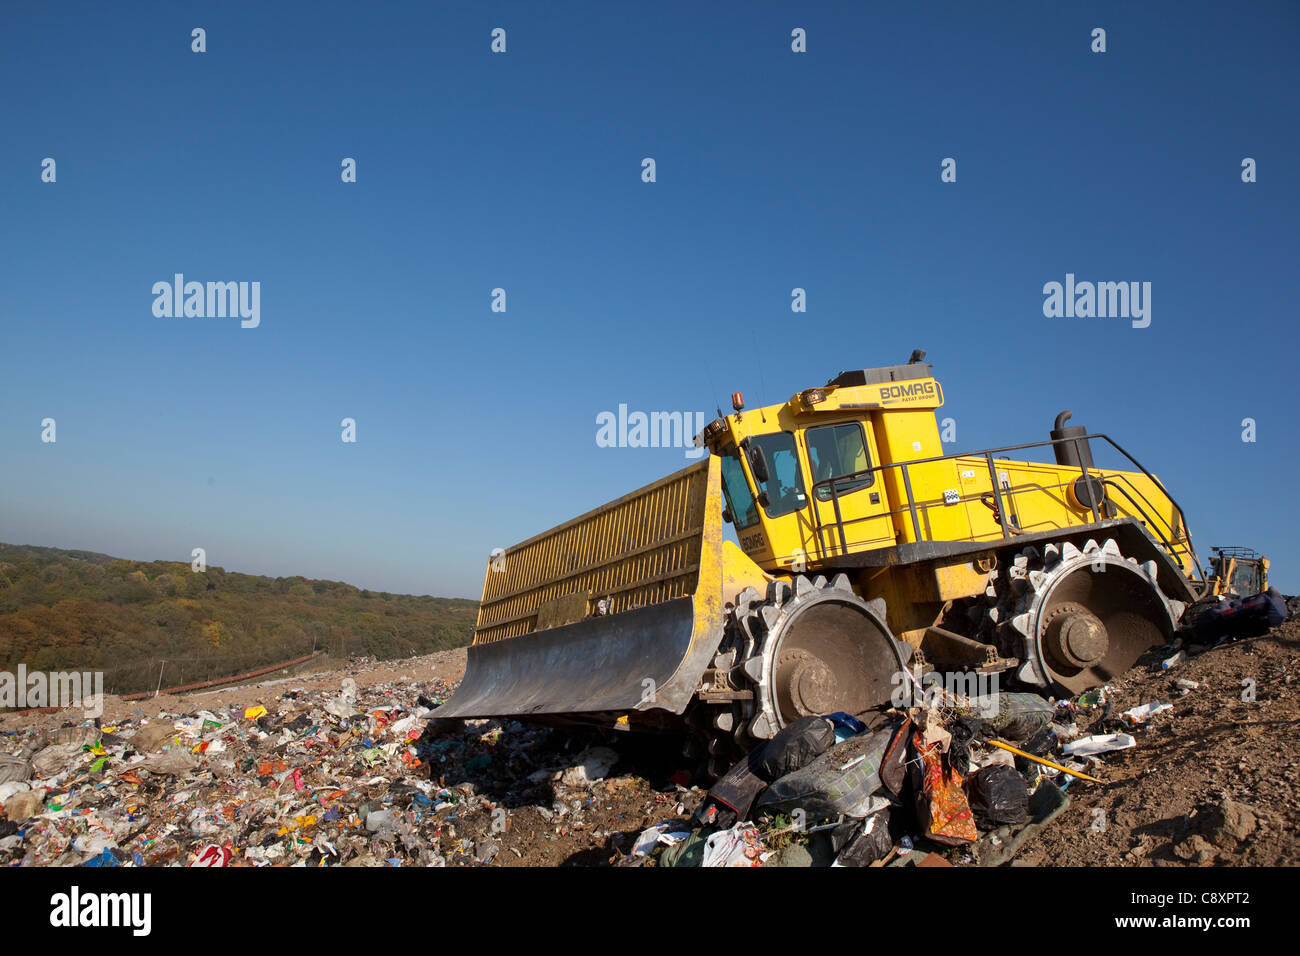 A landfill site Stock Photo